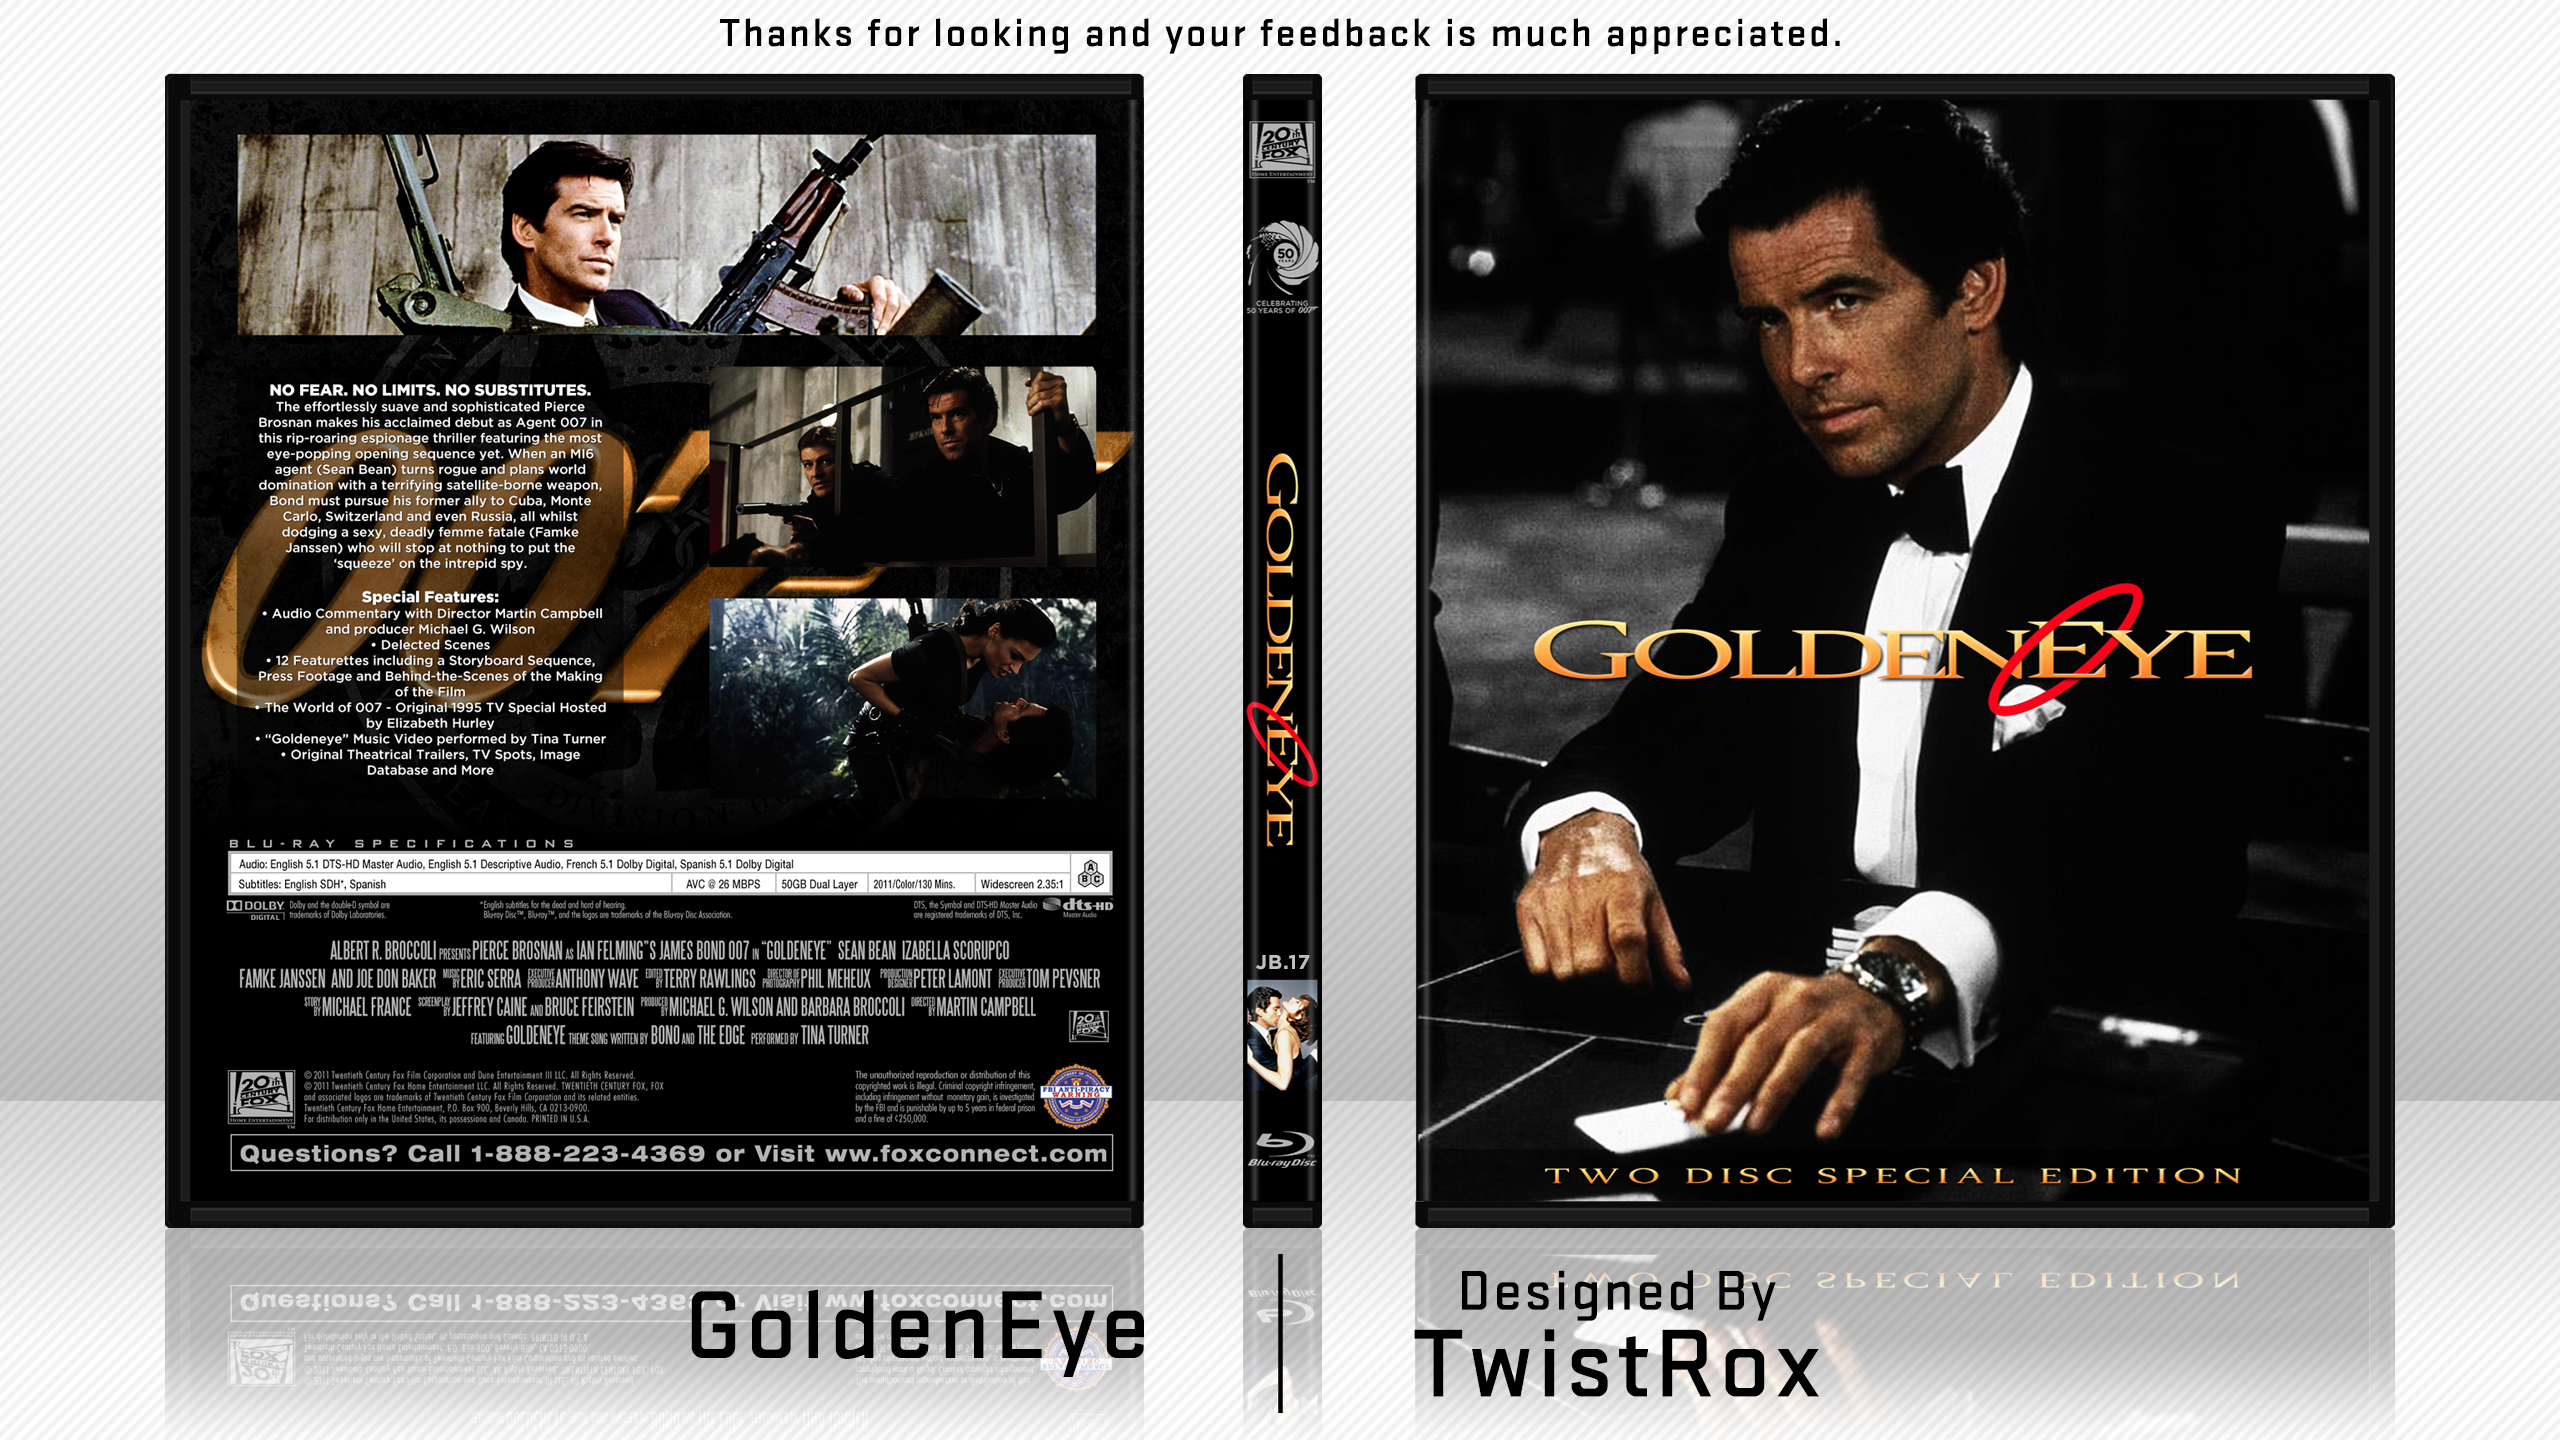 007: GoldenEye box cover